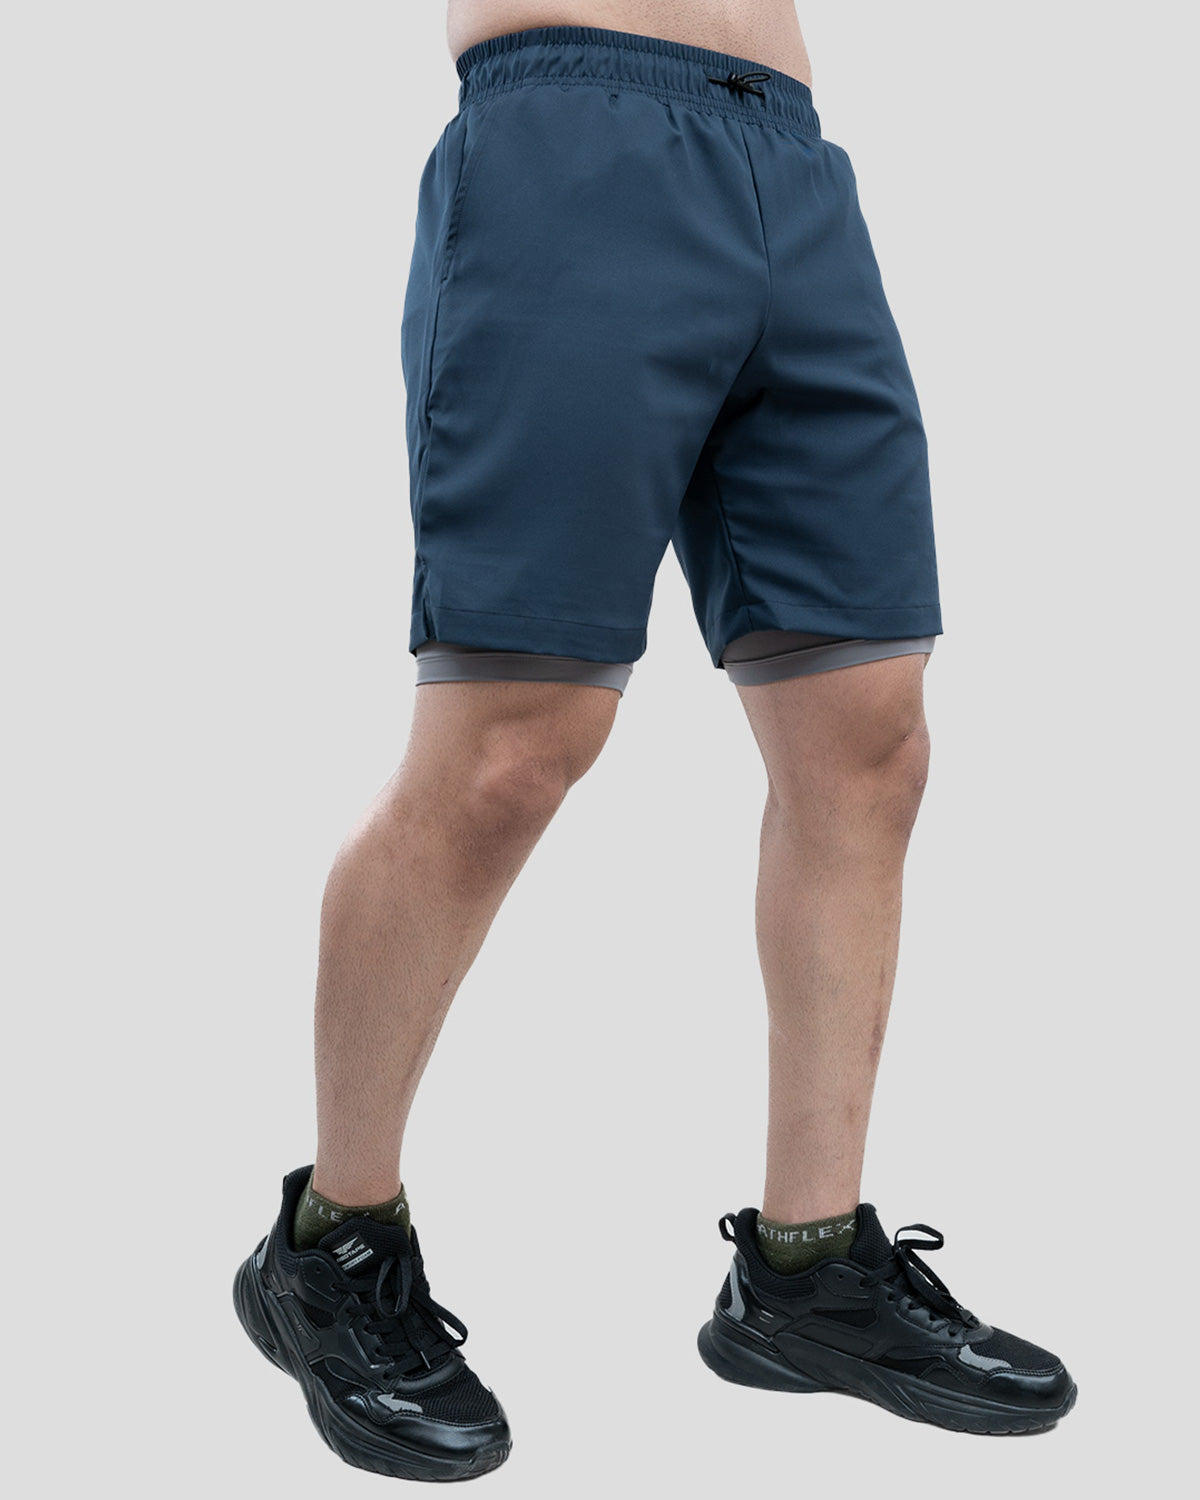 Lifting 2 in 1 Shorts (Navy Blue/Grey)